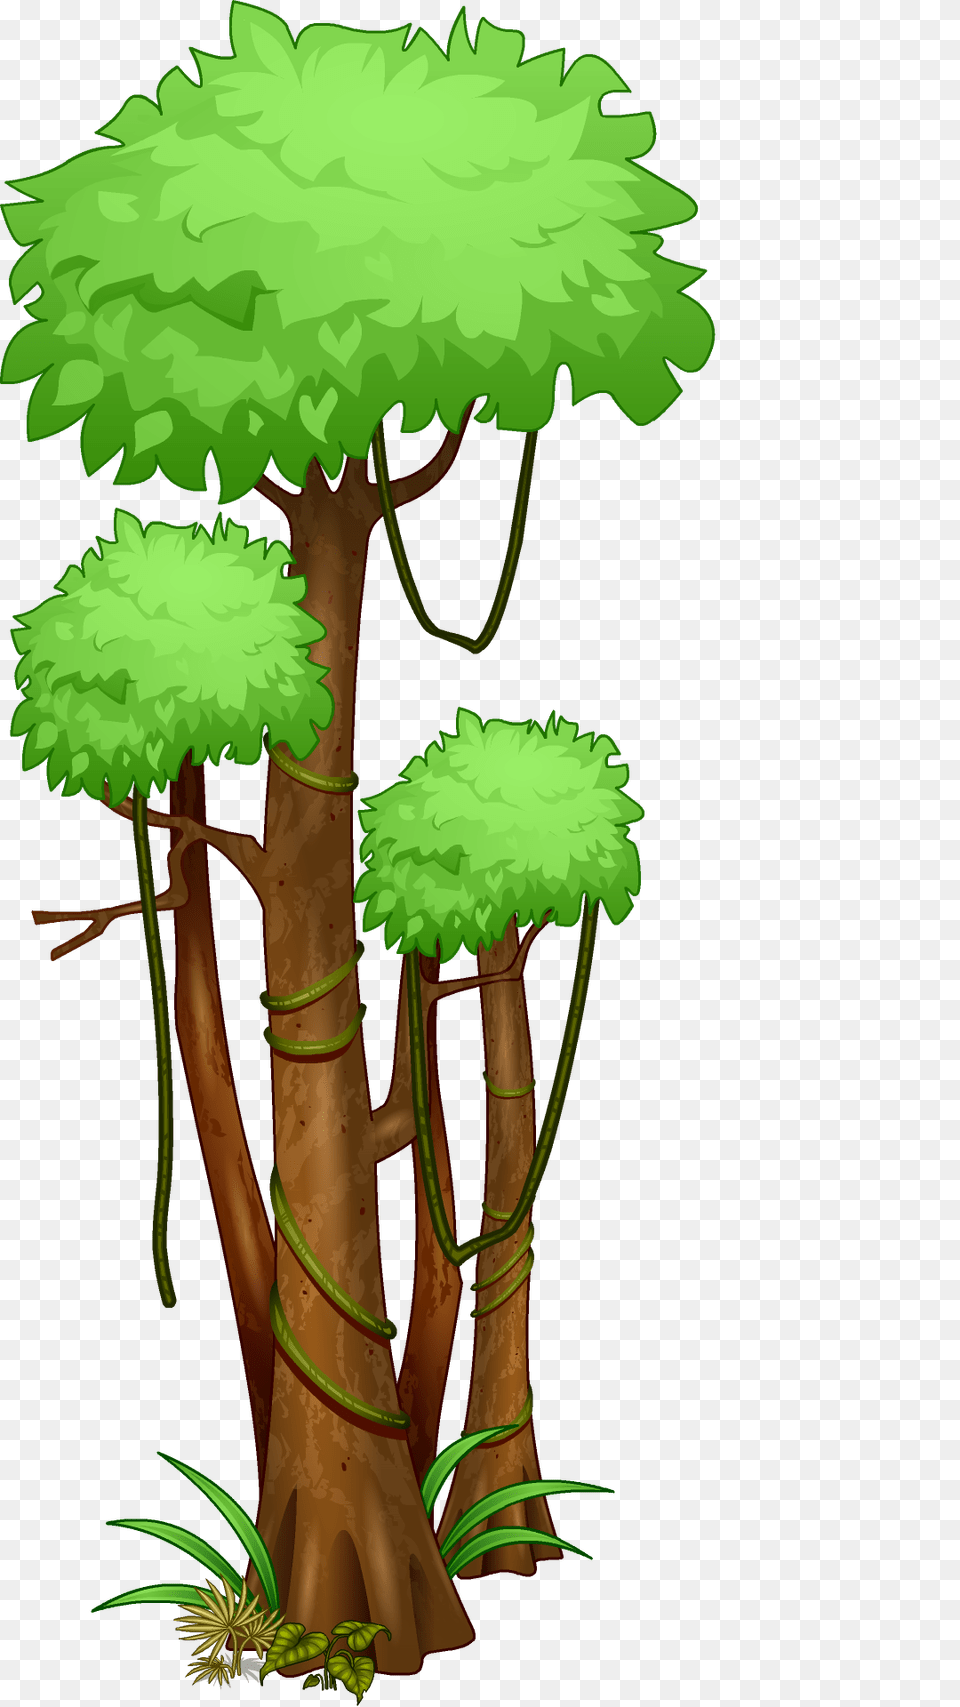 Tree Amazon Rainforest Jungle Tropical Rainforest, Vegetation, Green, Plant, Tree Trunk Png Image